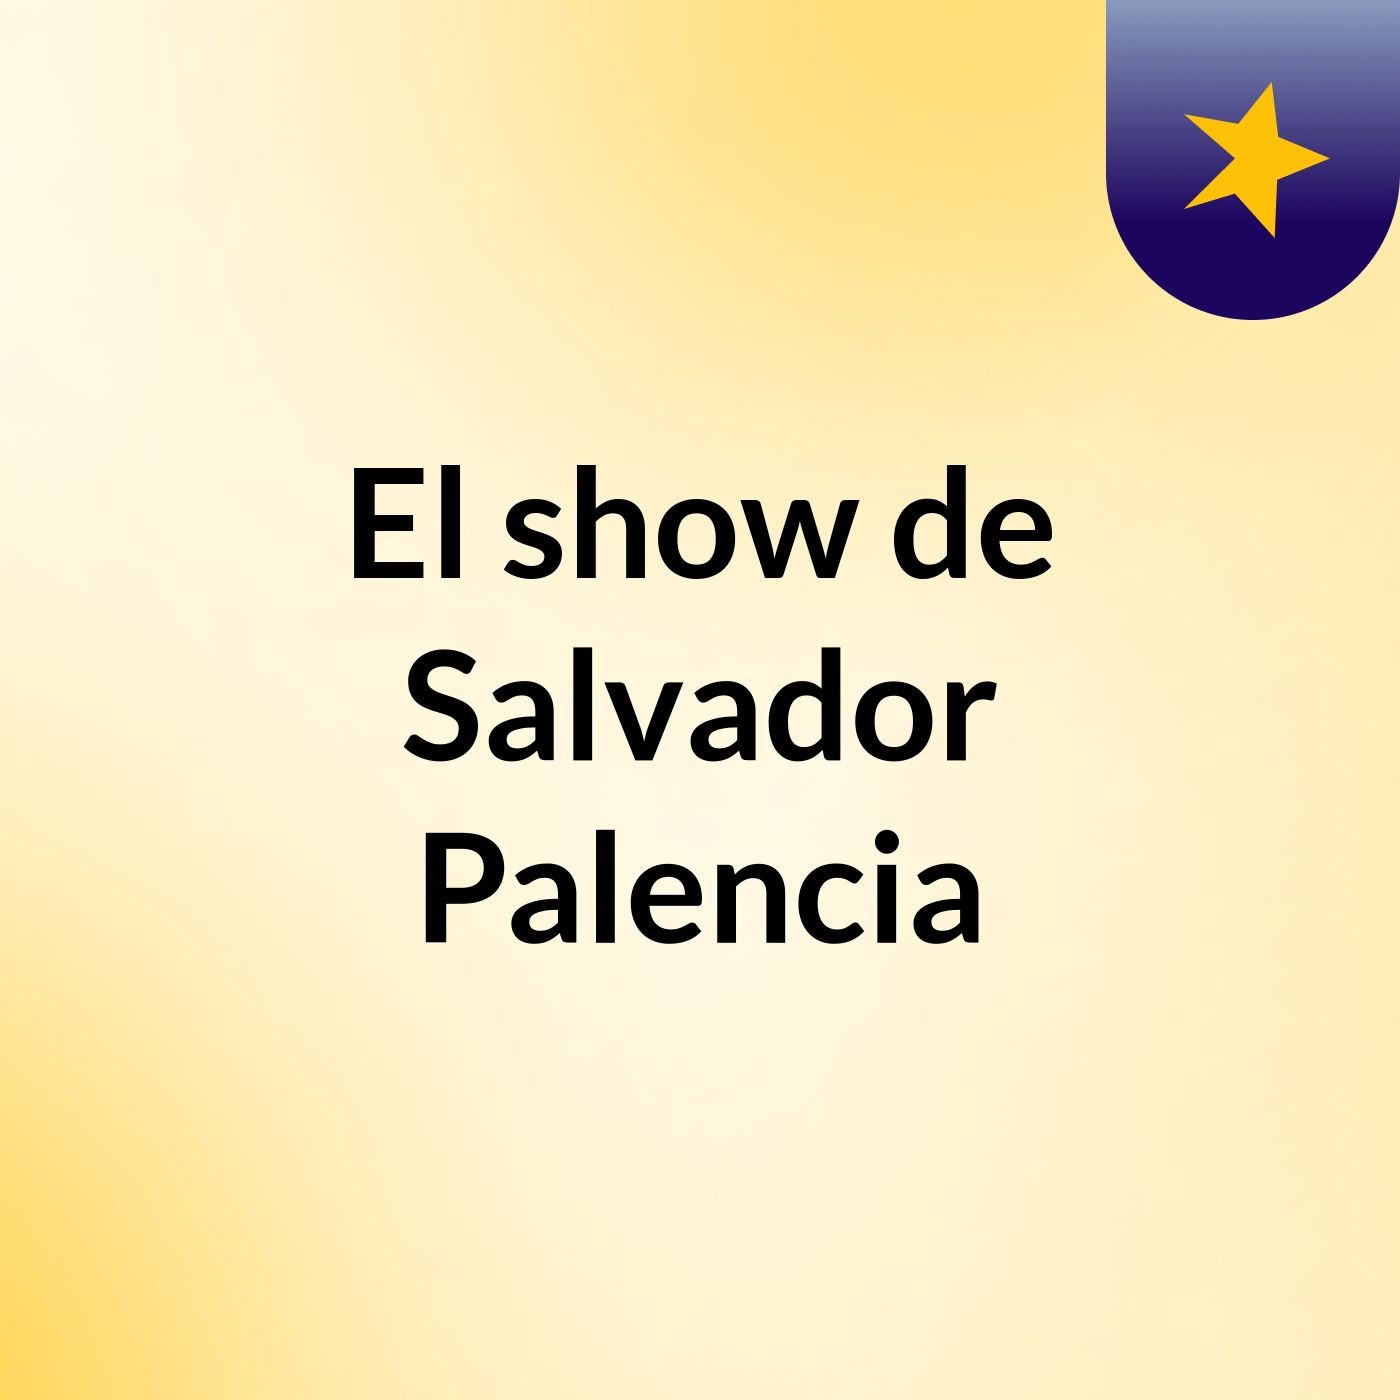 El show de Salvador Palencia